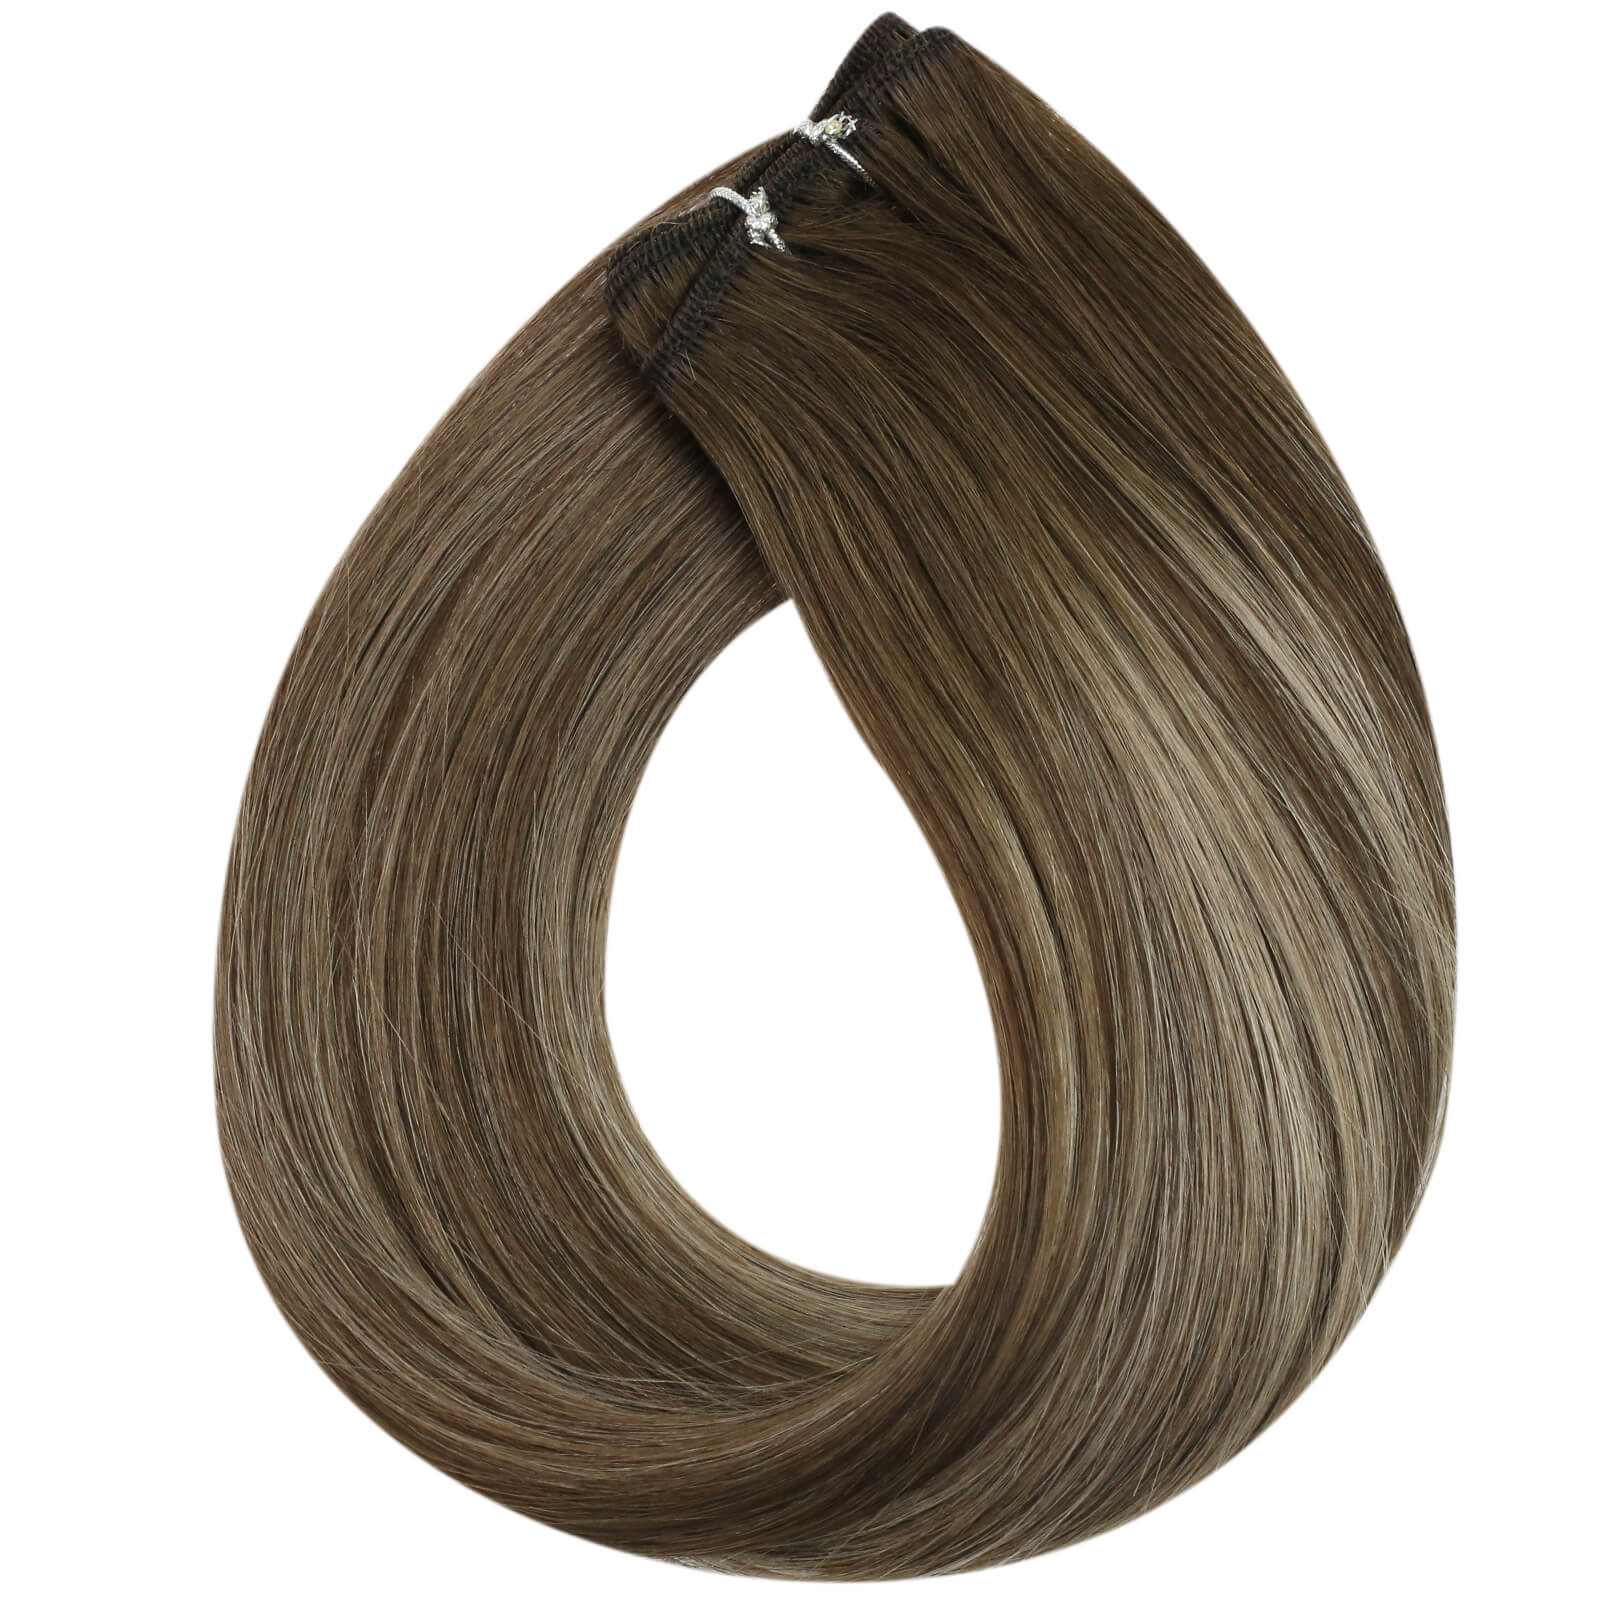 Virgin Sew In Weft Human Hair Extensions Dark Brown Balayage Color #4/27/4 - FShine Shop